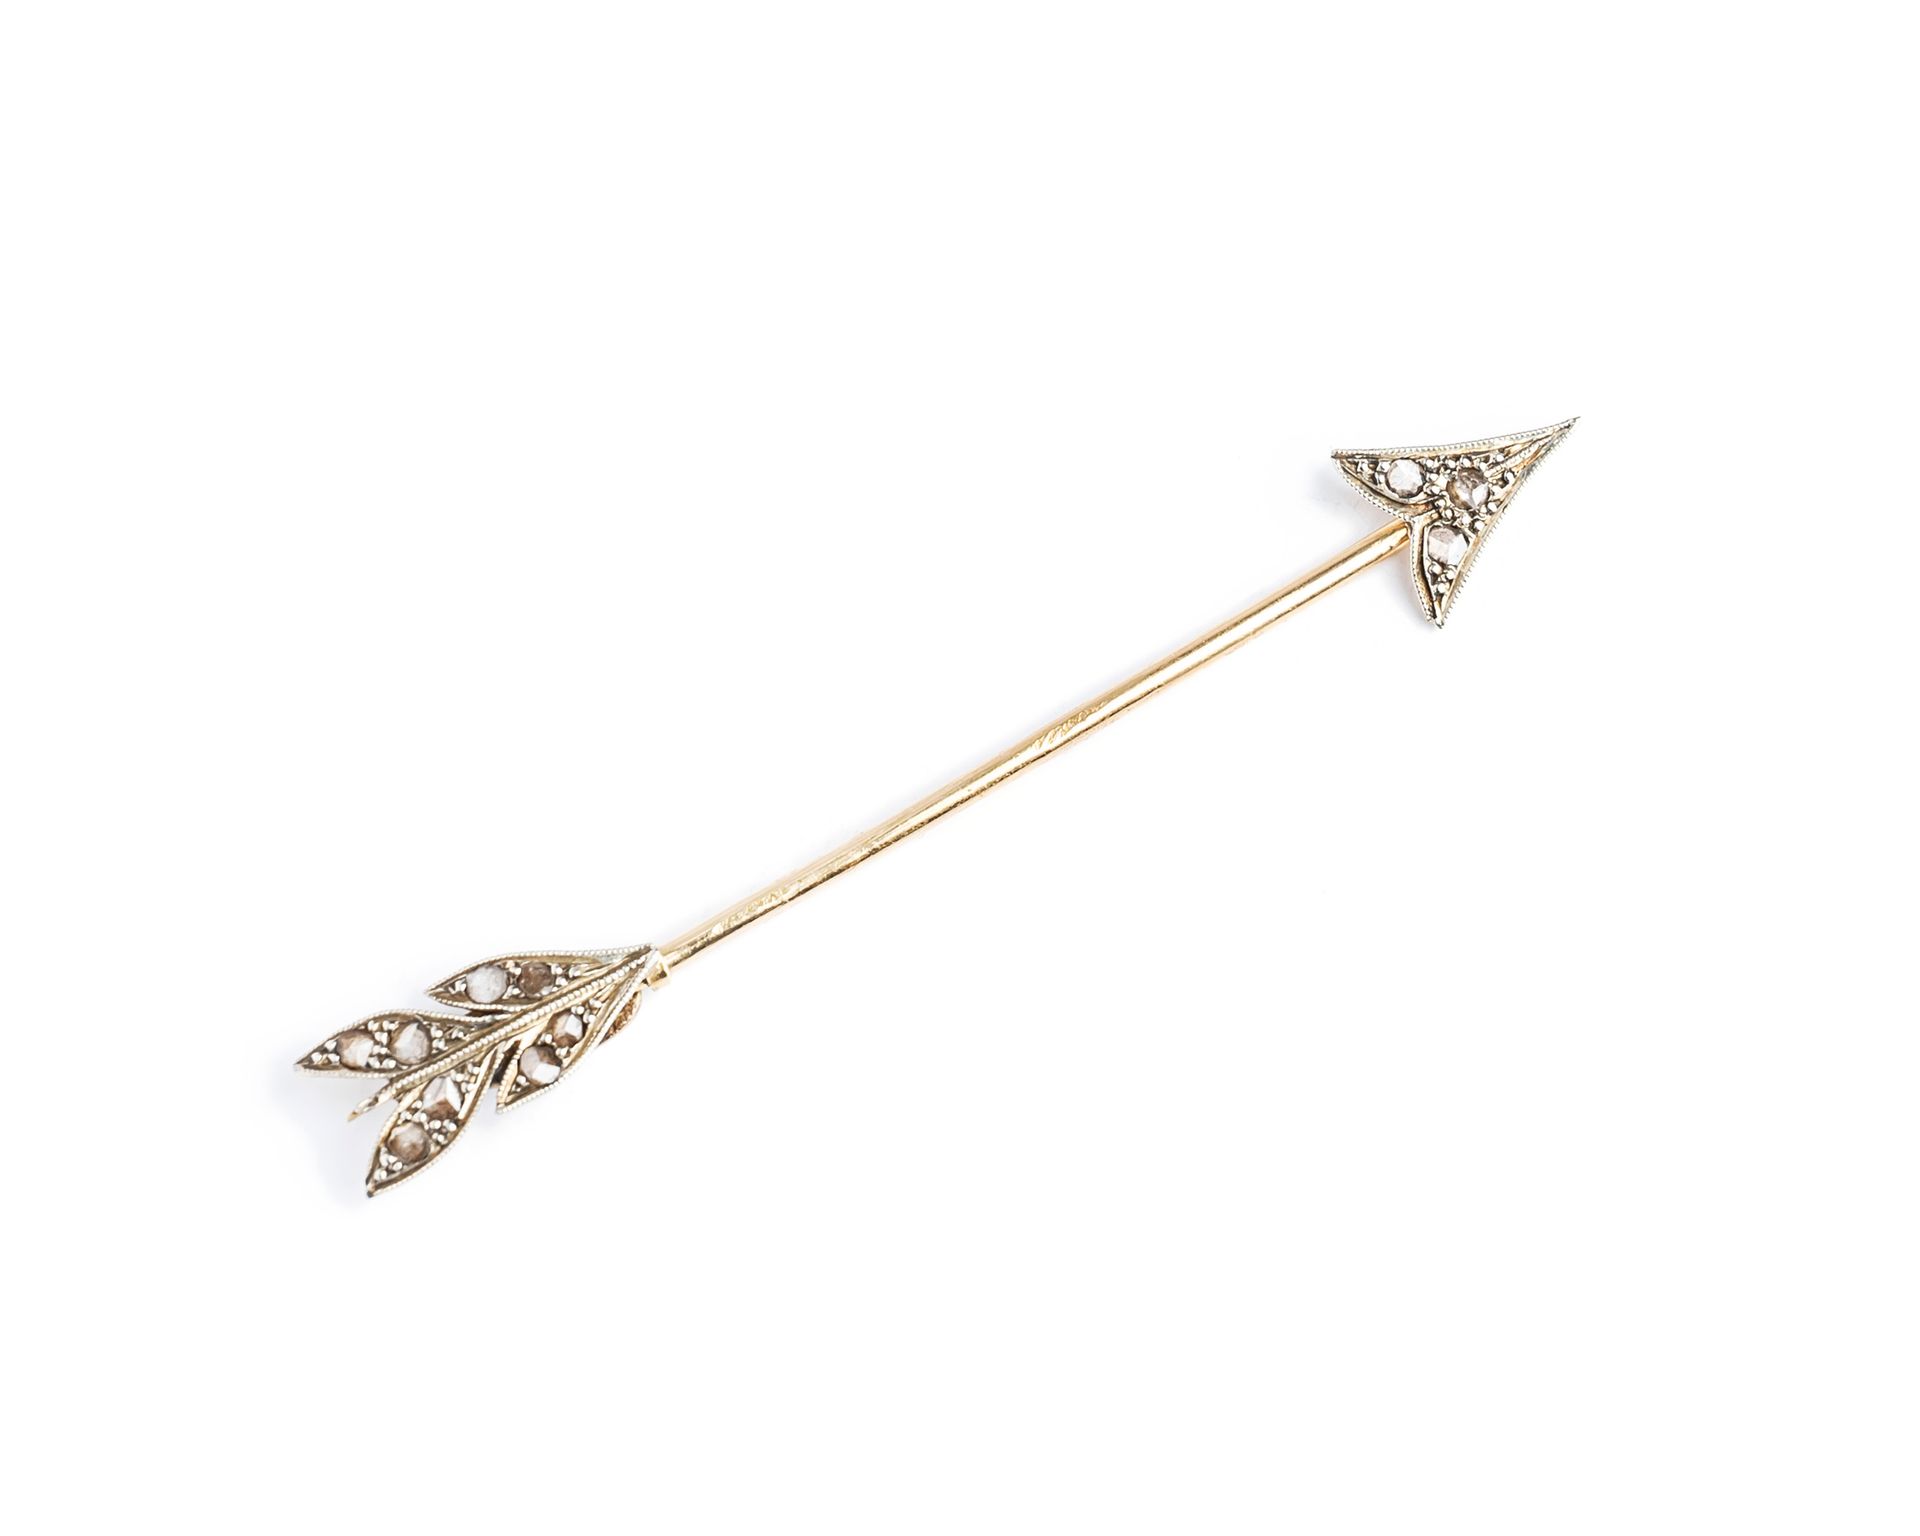 Null 18K（750千分之一）黄金和银 "箭头 "胸针，镶嵌玫瑰式切割钻石
长度 : 5,8 cm
毛重 : 1.6克